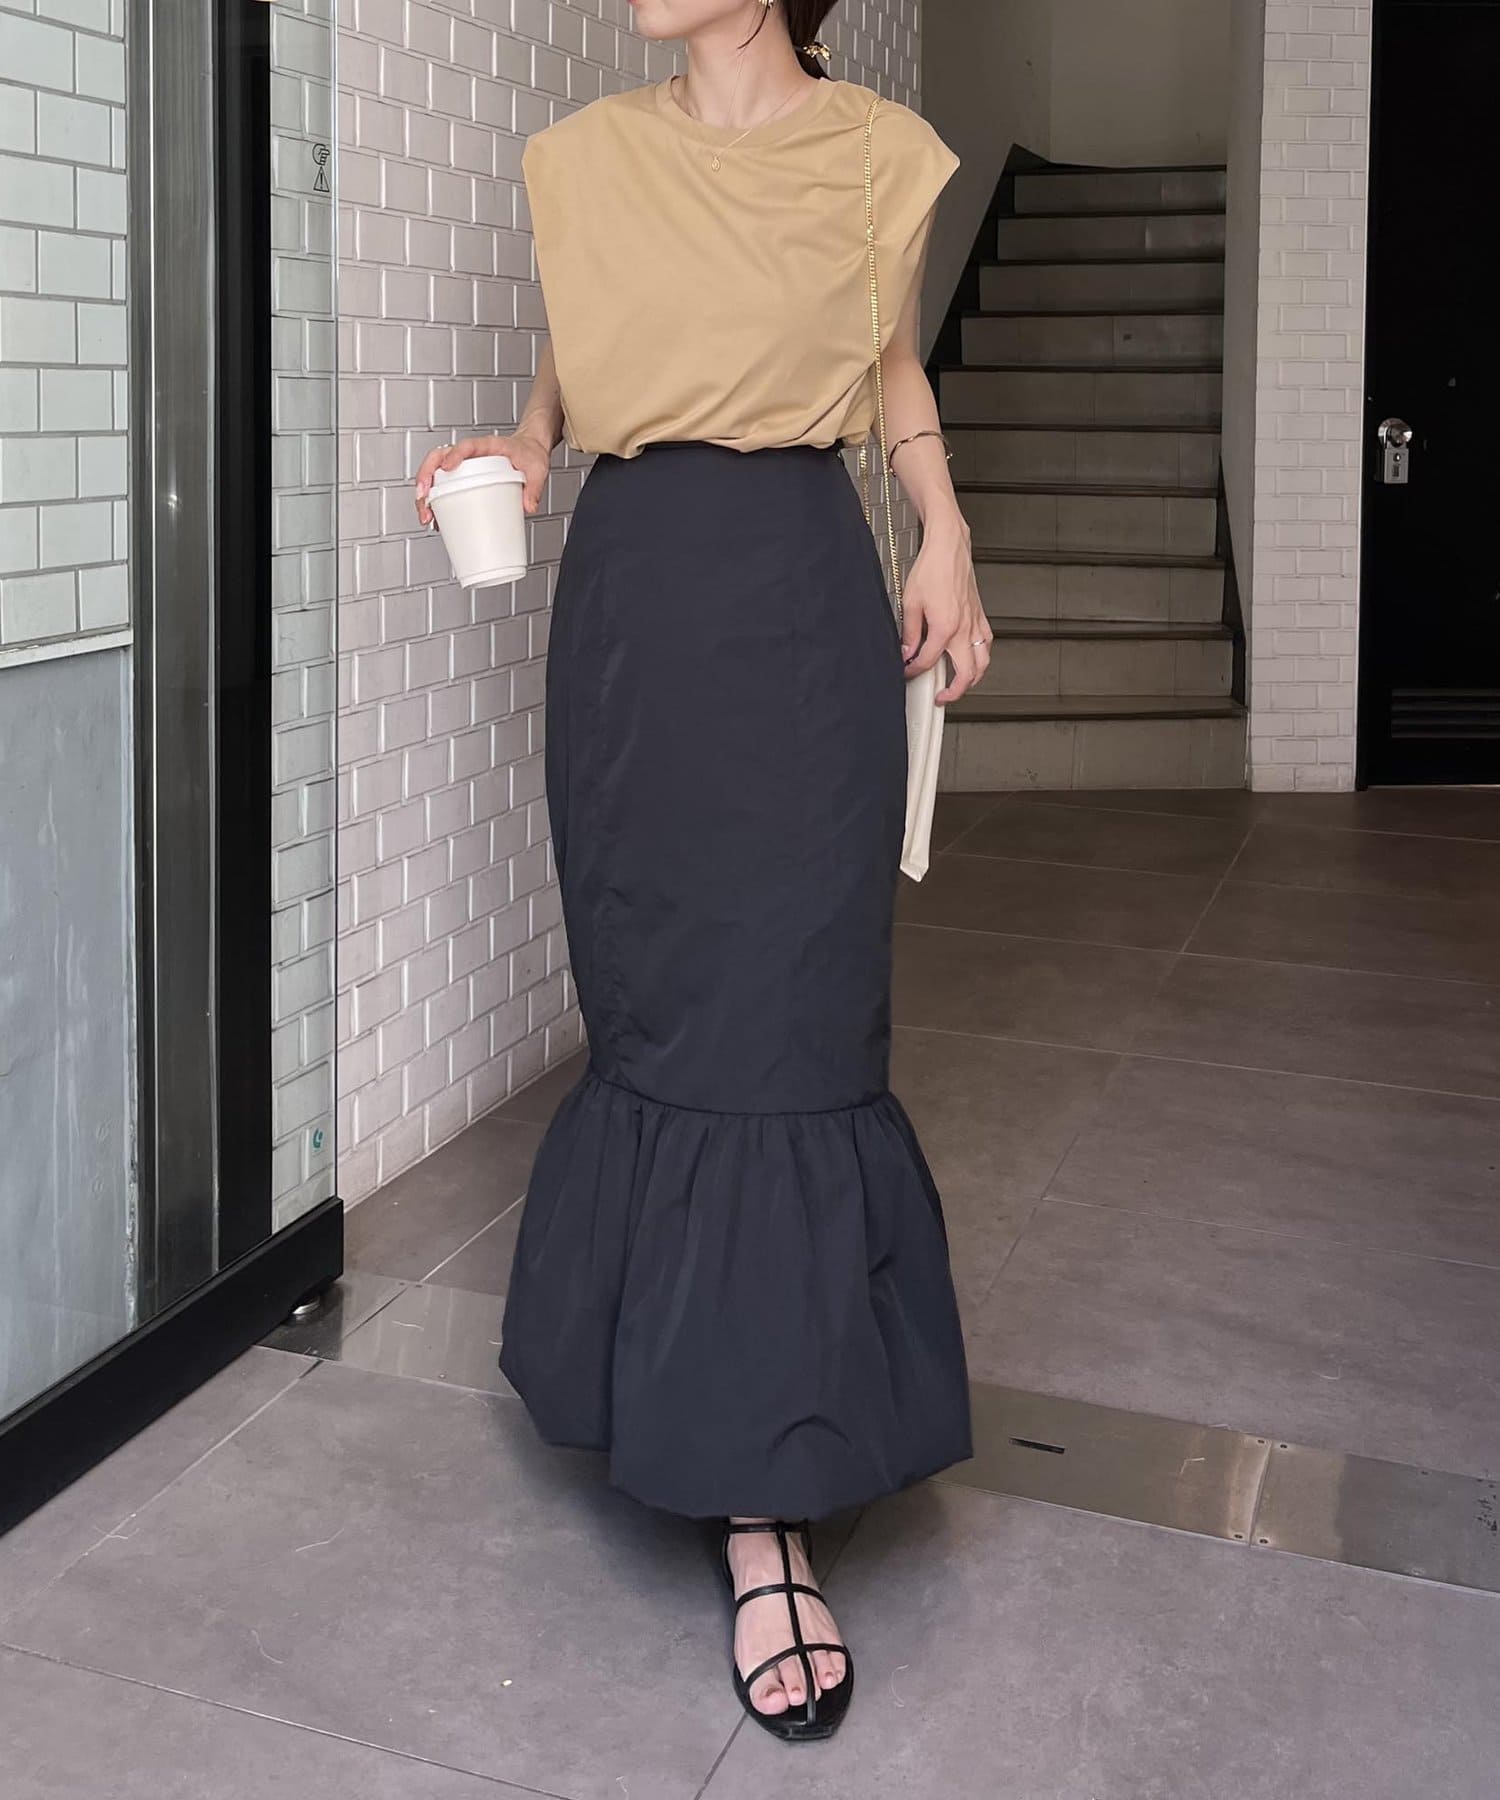 CAPRICIEUX LE'MAGE(カプリシュレマージュ) 裾バルーンスカート